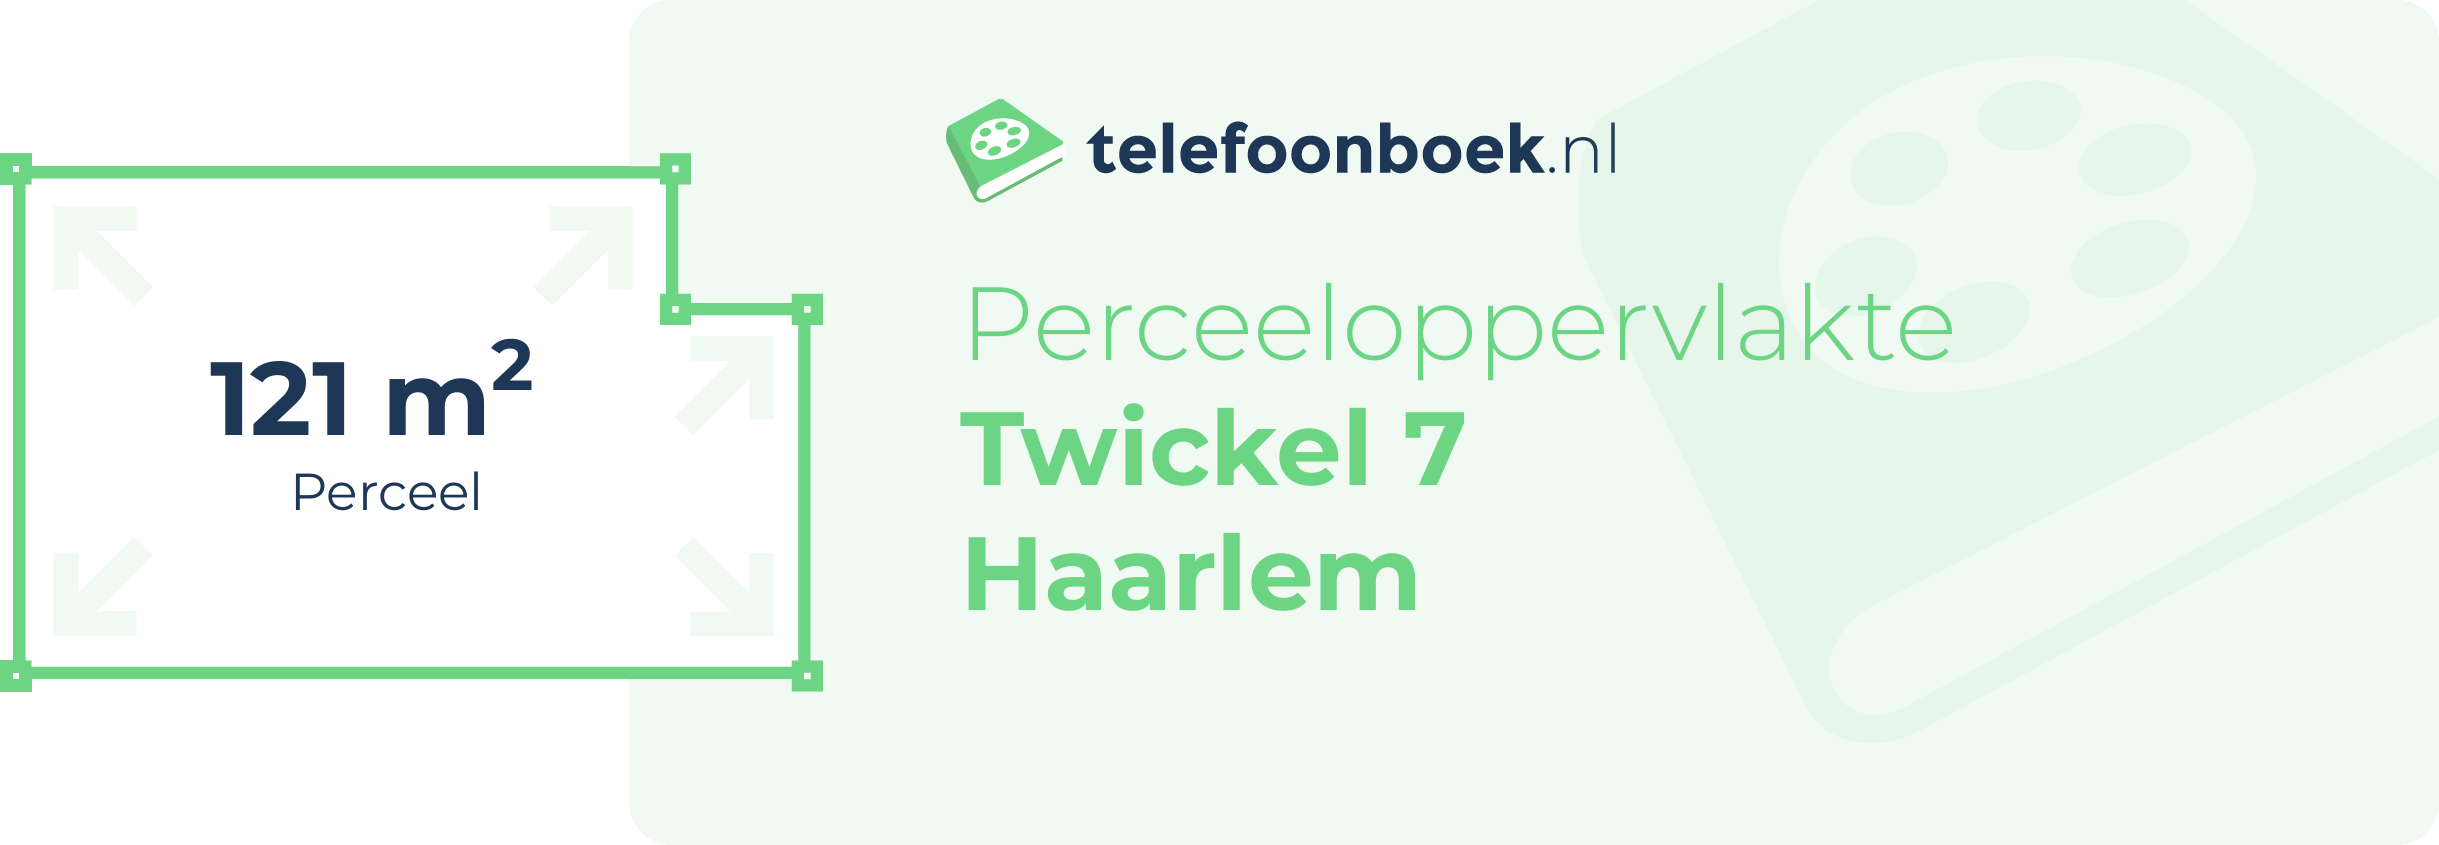 Perceeloppervlakte Twickel 7 Haarlem